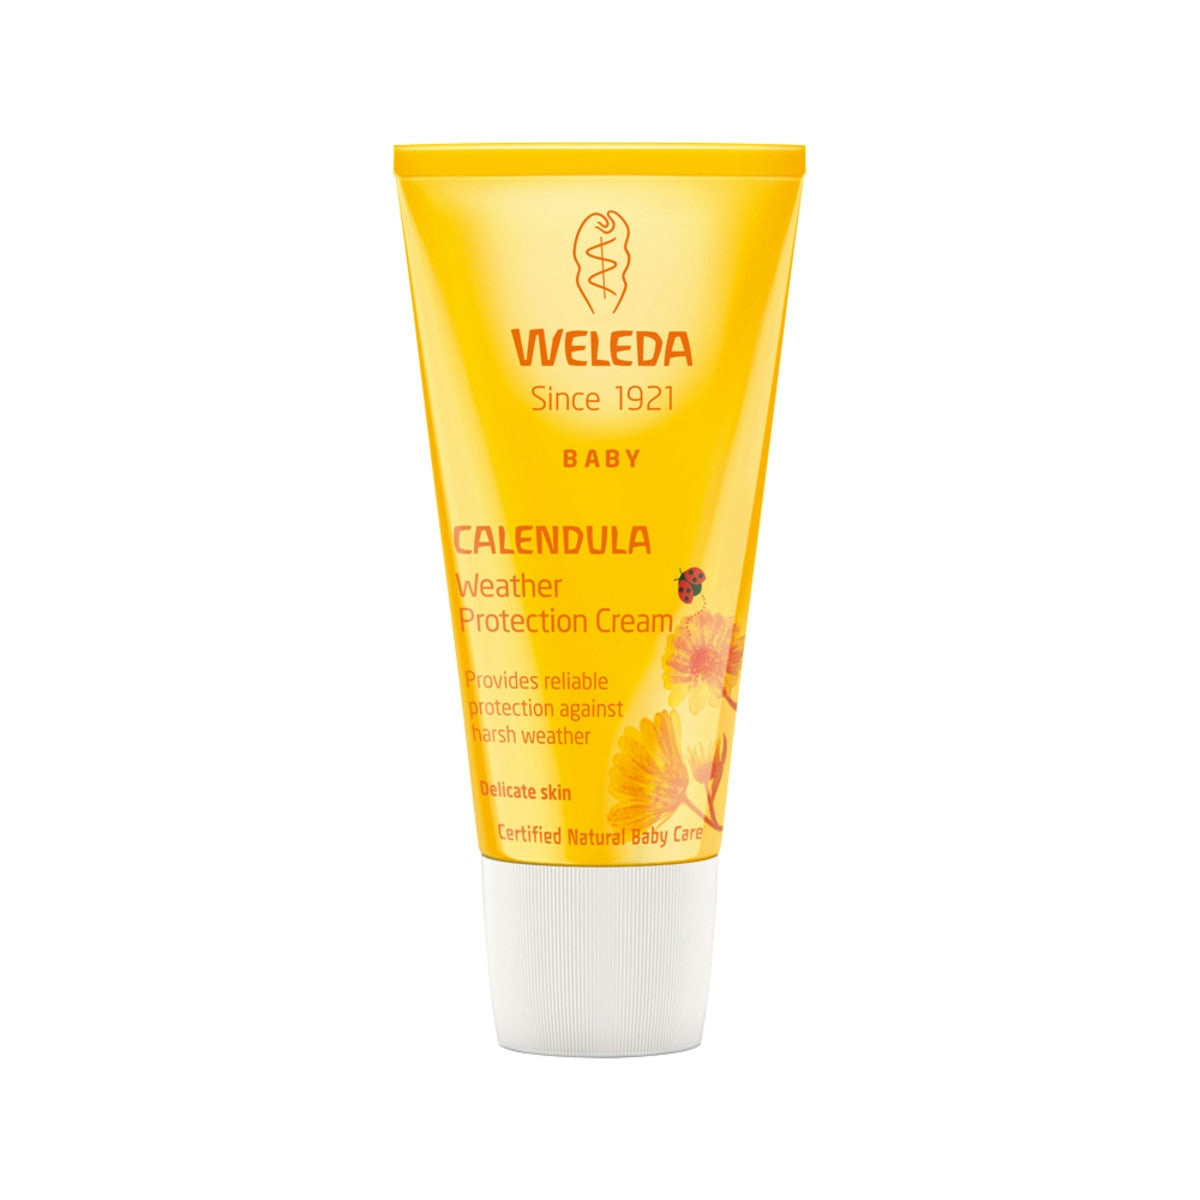 image of Weleda Baby Weather Protection Cream Calendula 30ml on white background 